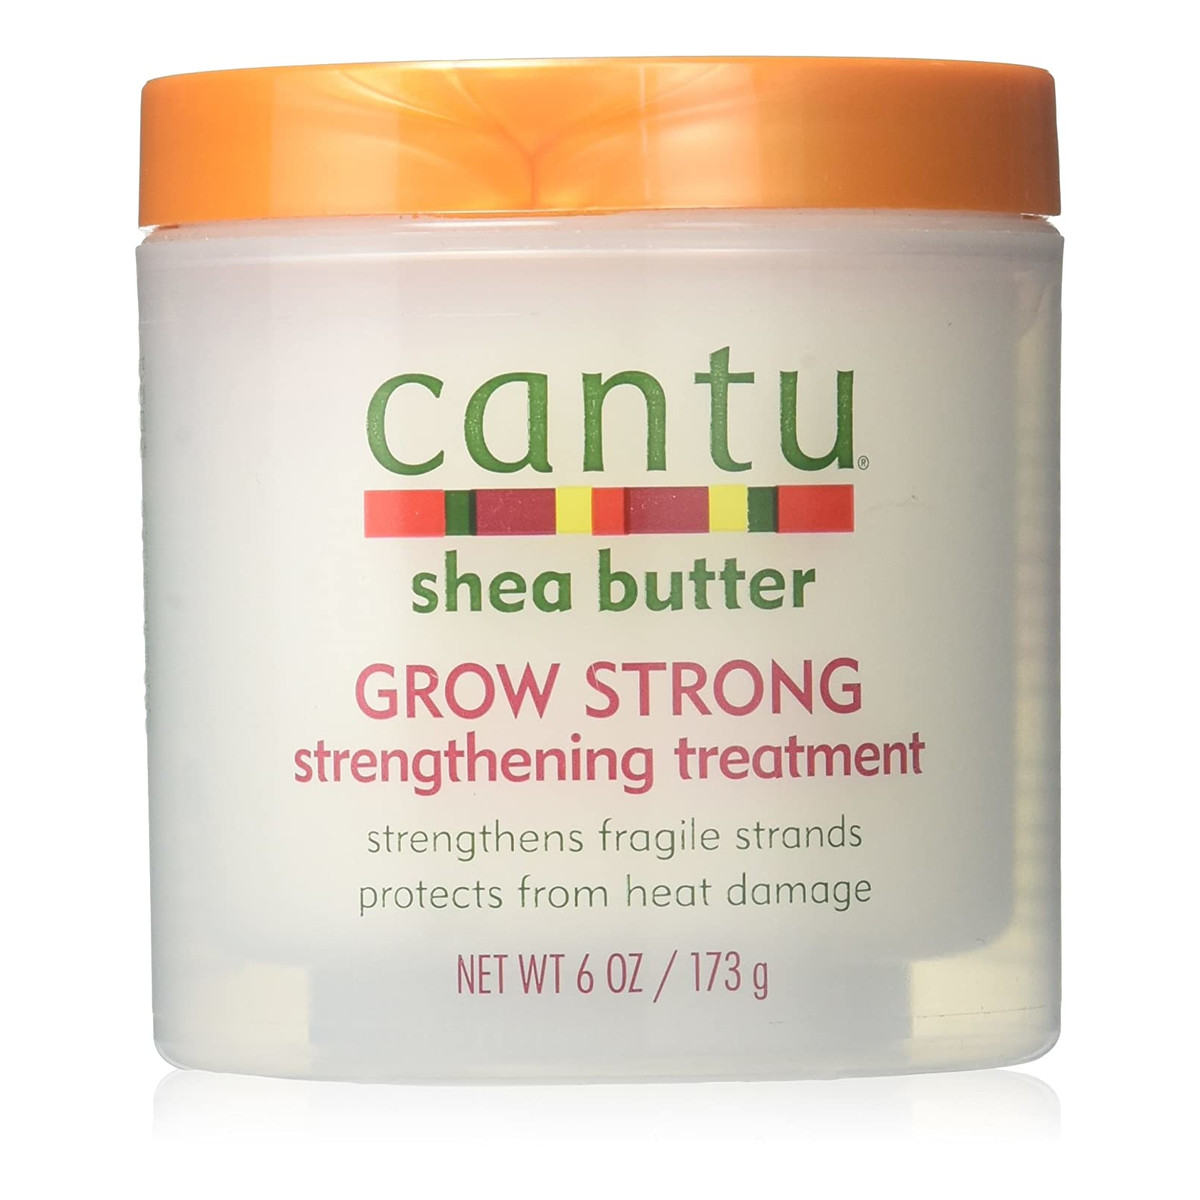 Cantu Shea Butter Grow Strong Treatment - Kuracja wzmacniająca włosy 173g